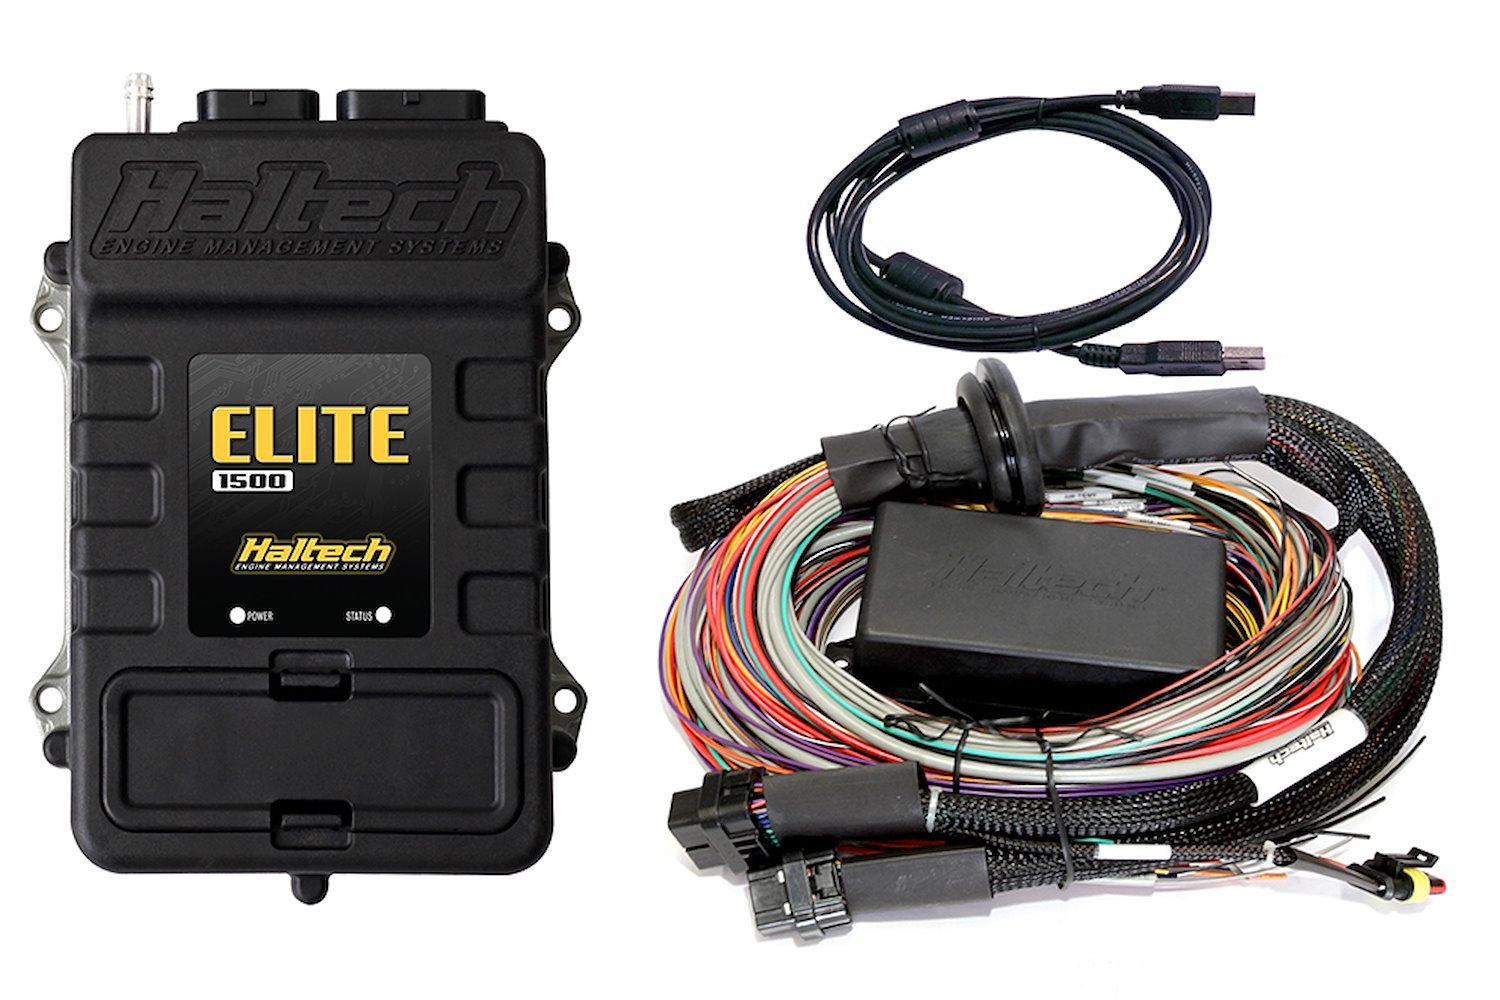 HT-150905 Elite 1500 + Premium Universal Wire-in Harness Kit, 5.0m (16')